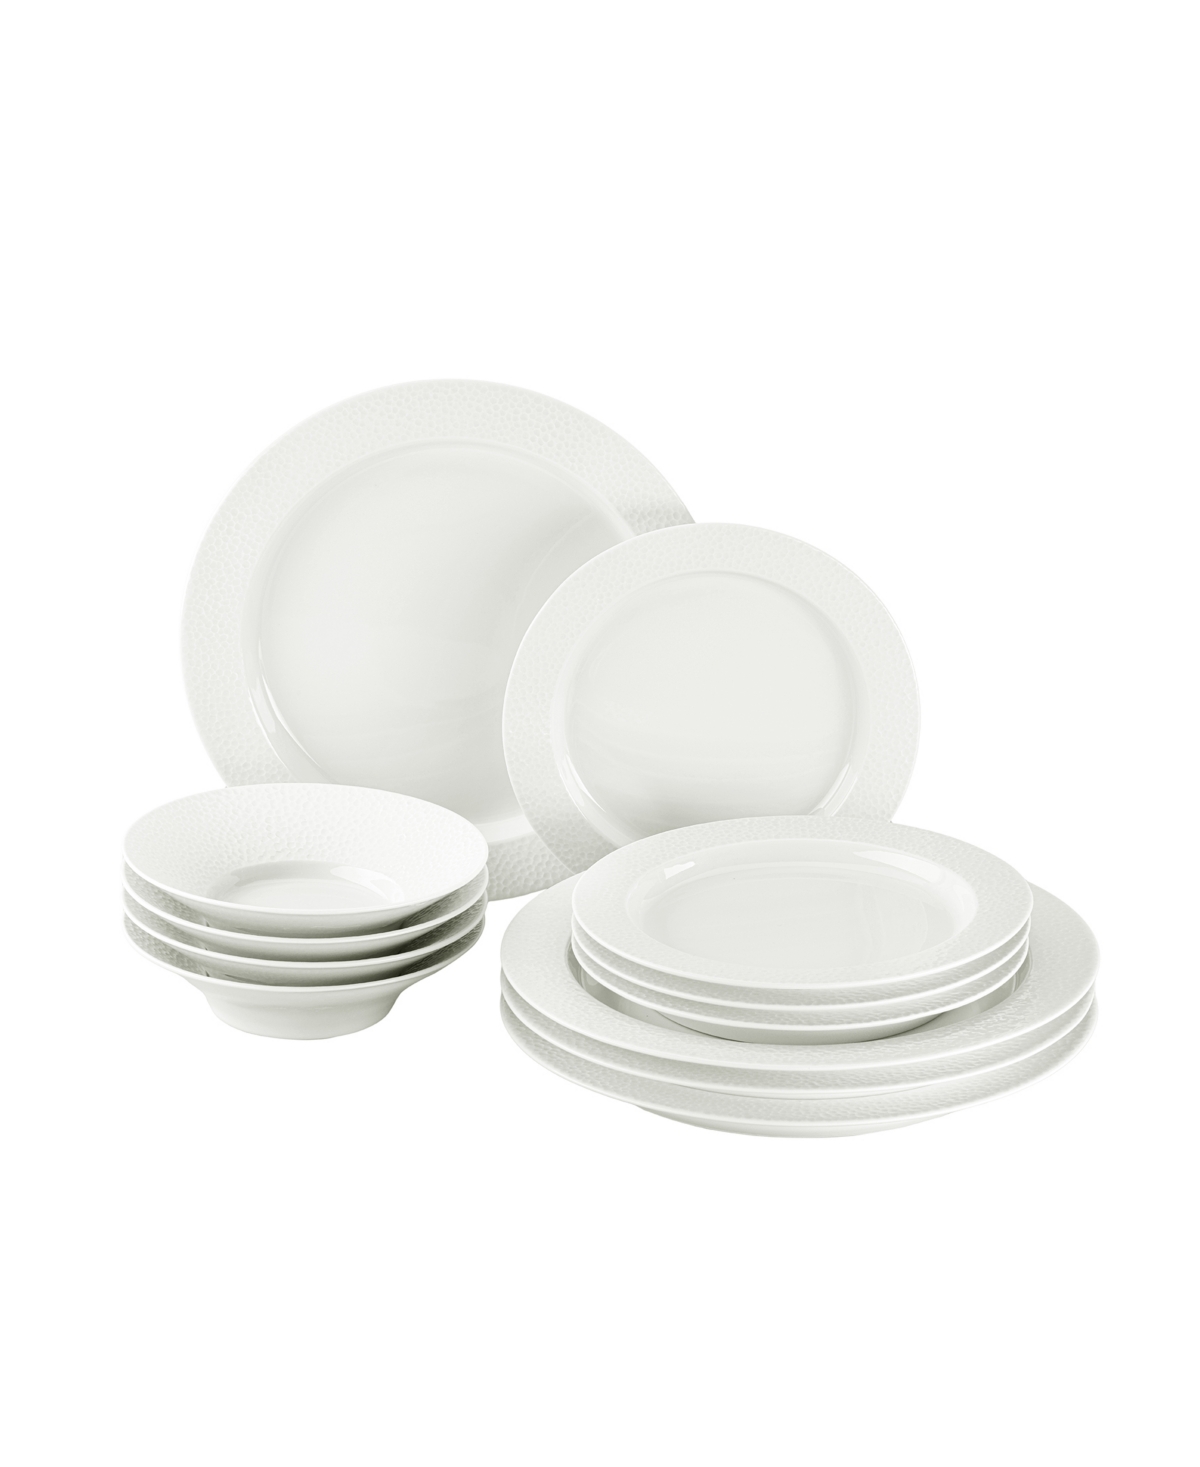 Iris 12 Legacy 12 Piece Dinnerware Set, Service for 4 - White